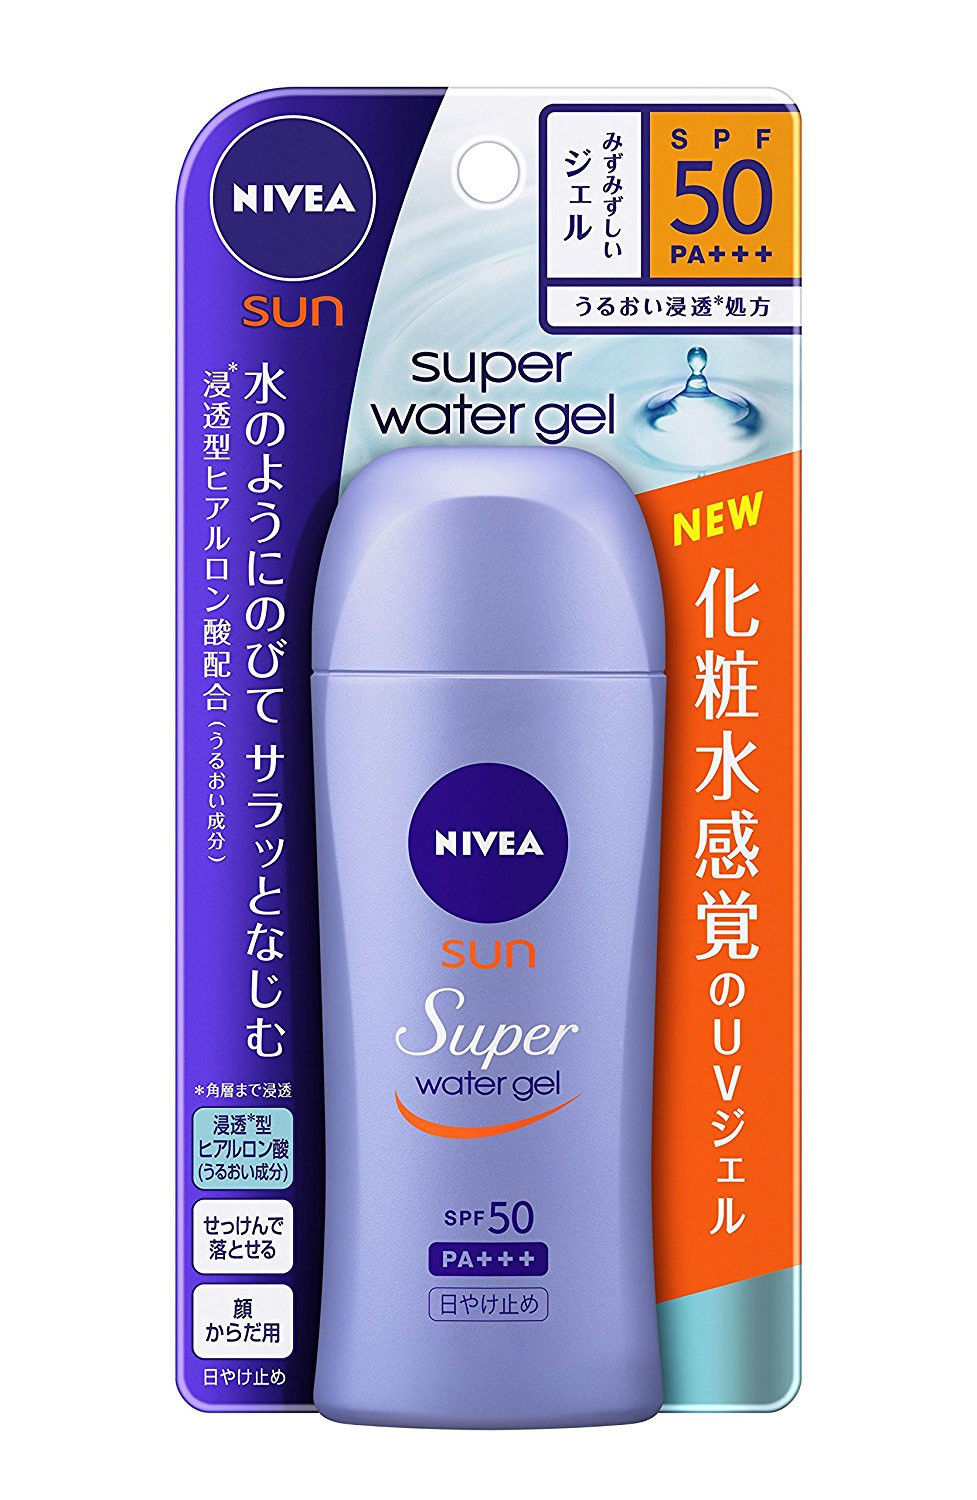 Nivea Sun Super Water Gel SPF 50 PA+++ Beauty Nivea   